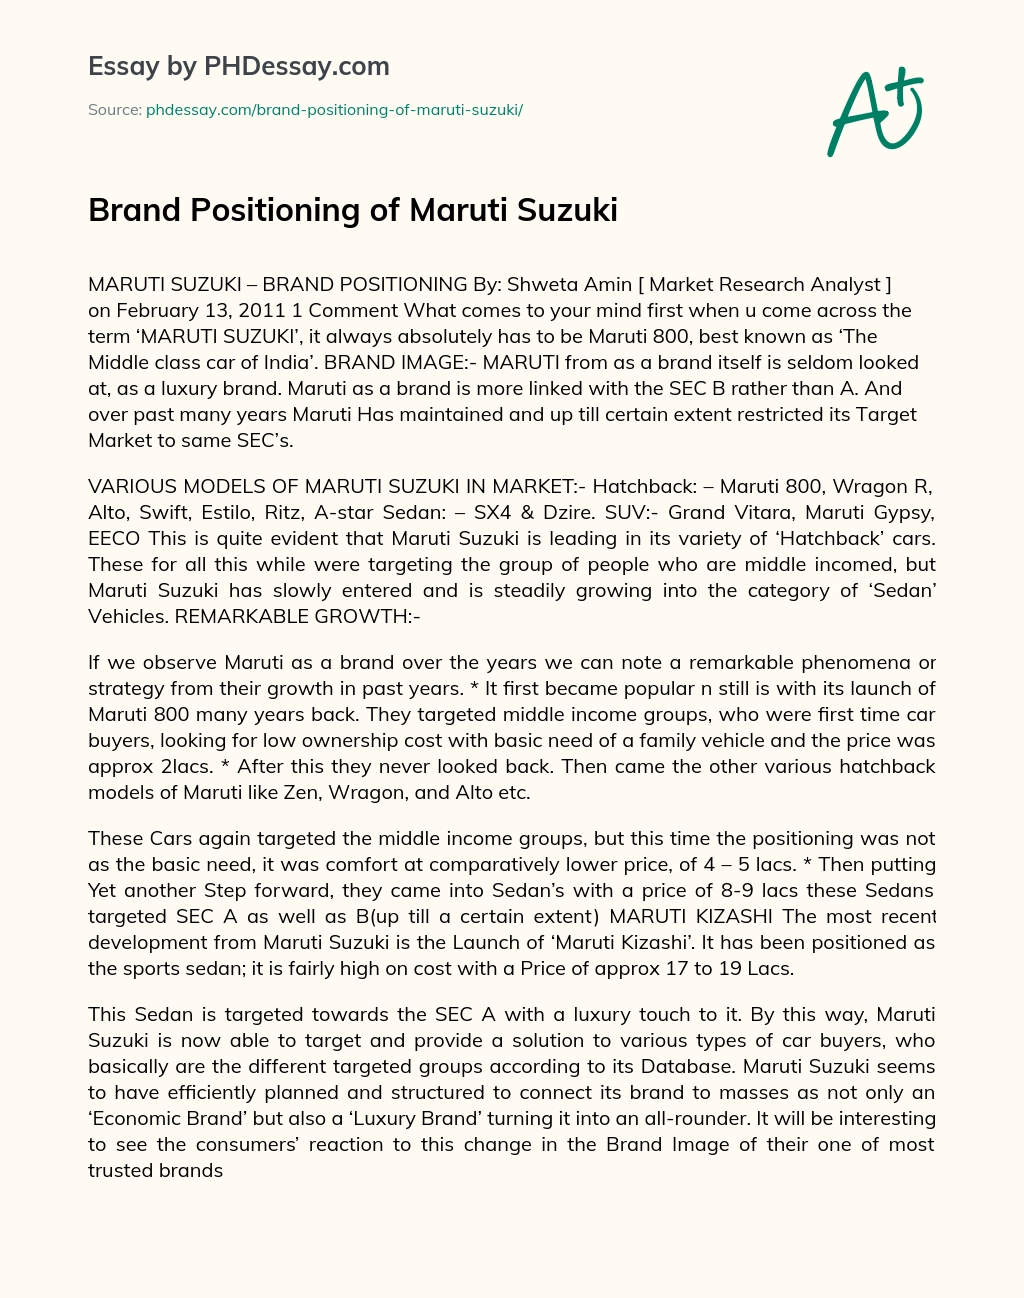 Brand Positioning of Maruti Suzuki essay